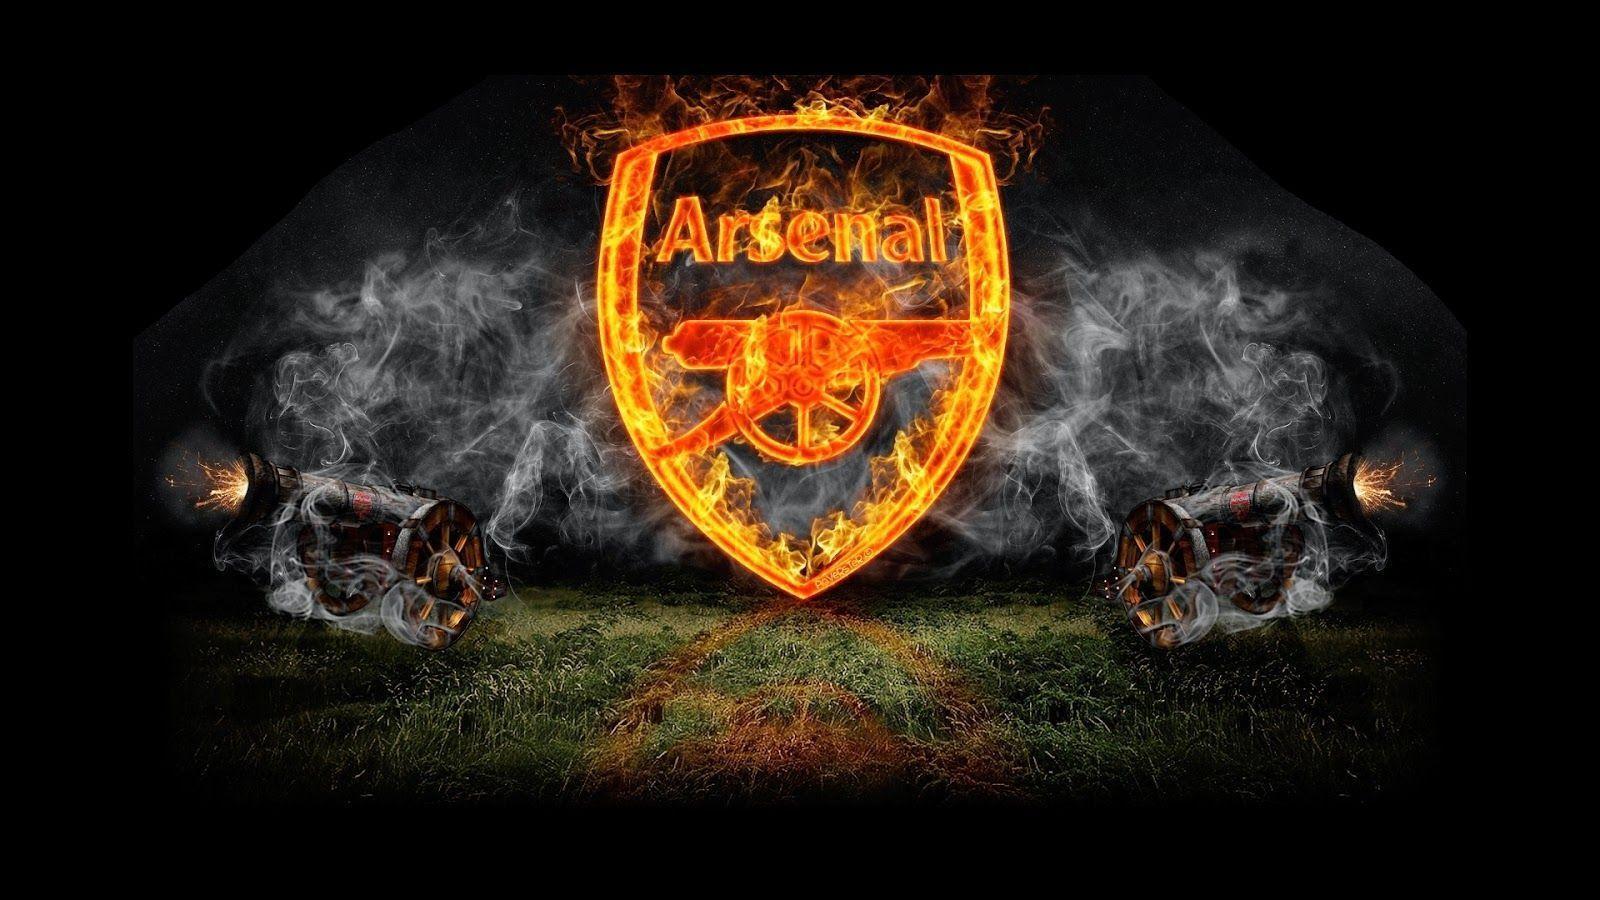 Arsenal wallpaper HD 2015. Wallpaper, Background, Image, Art